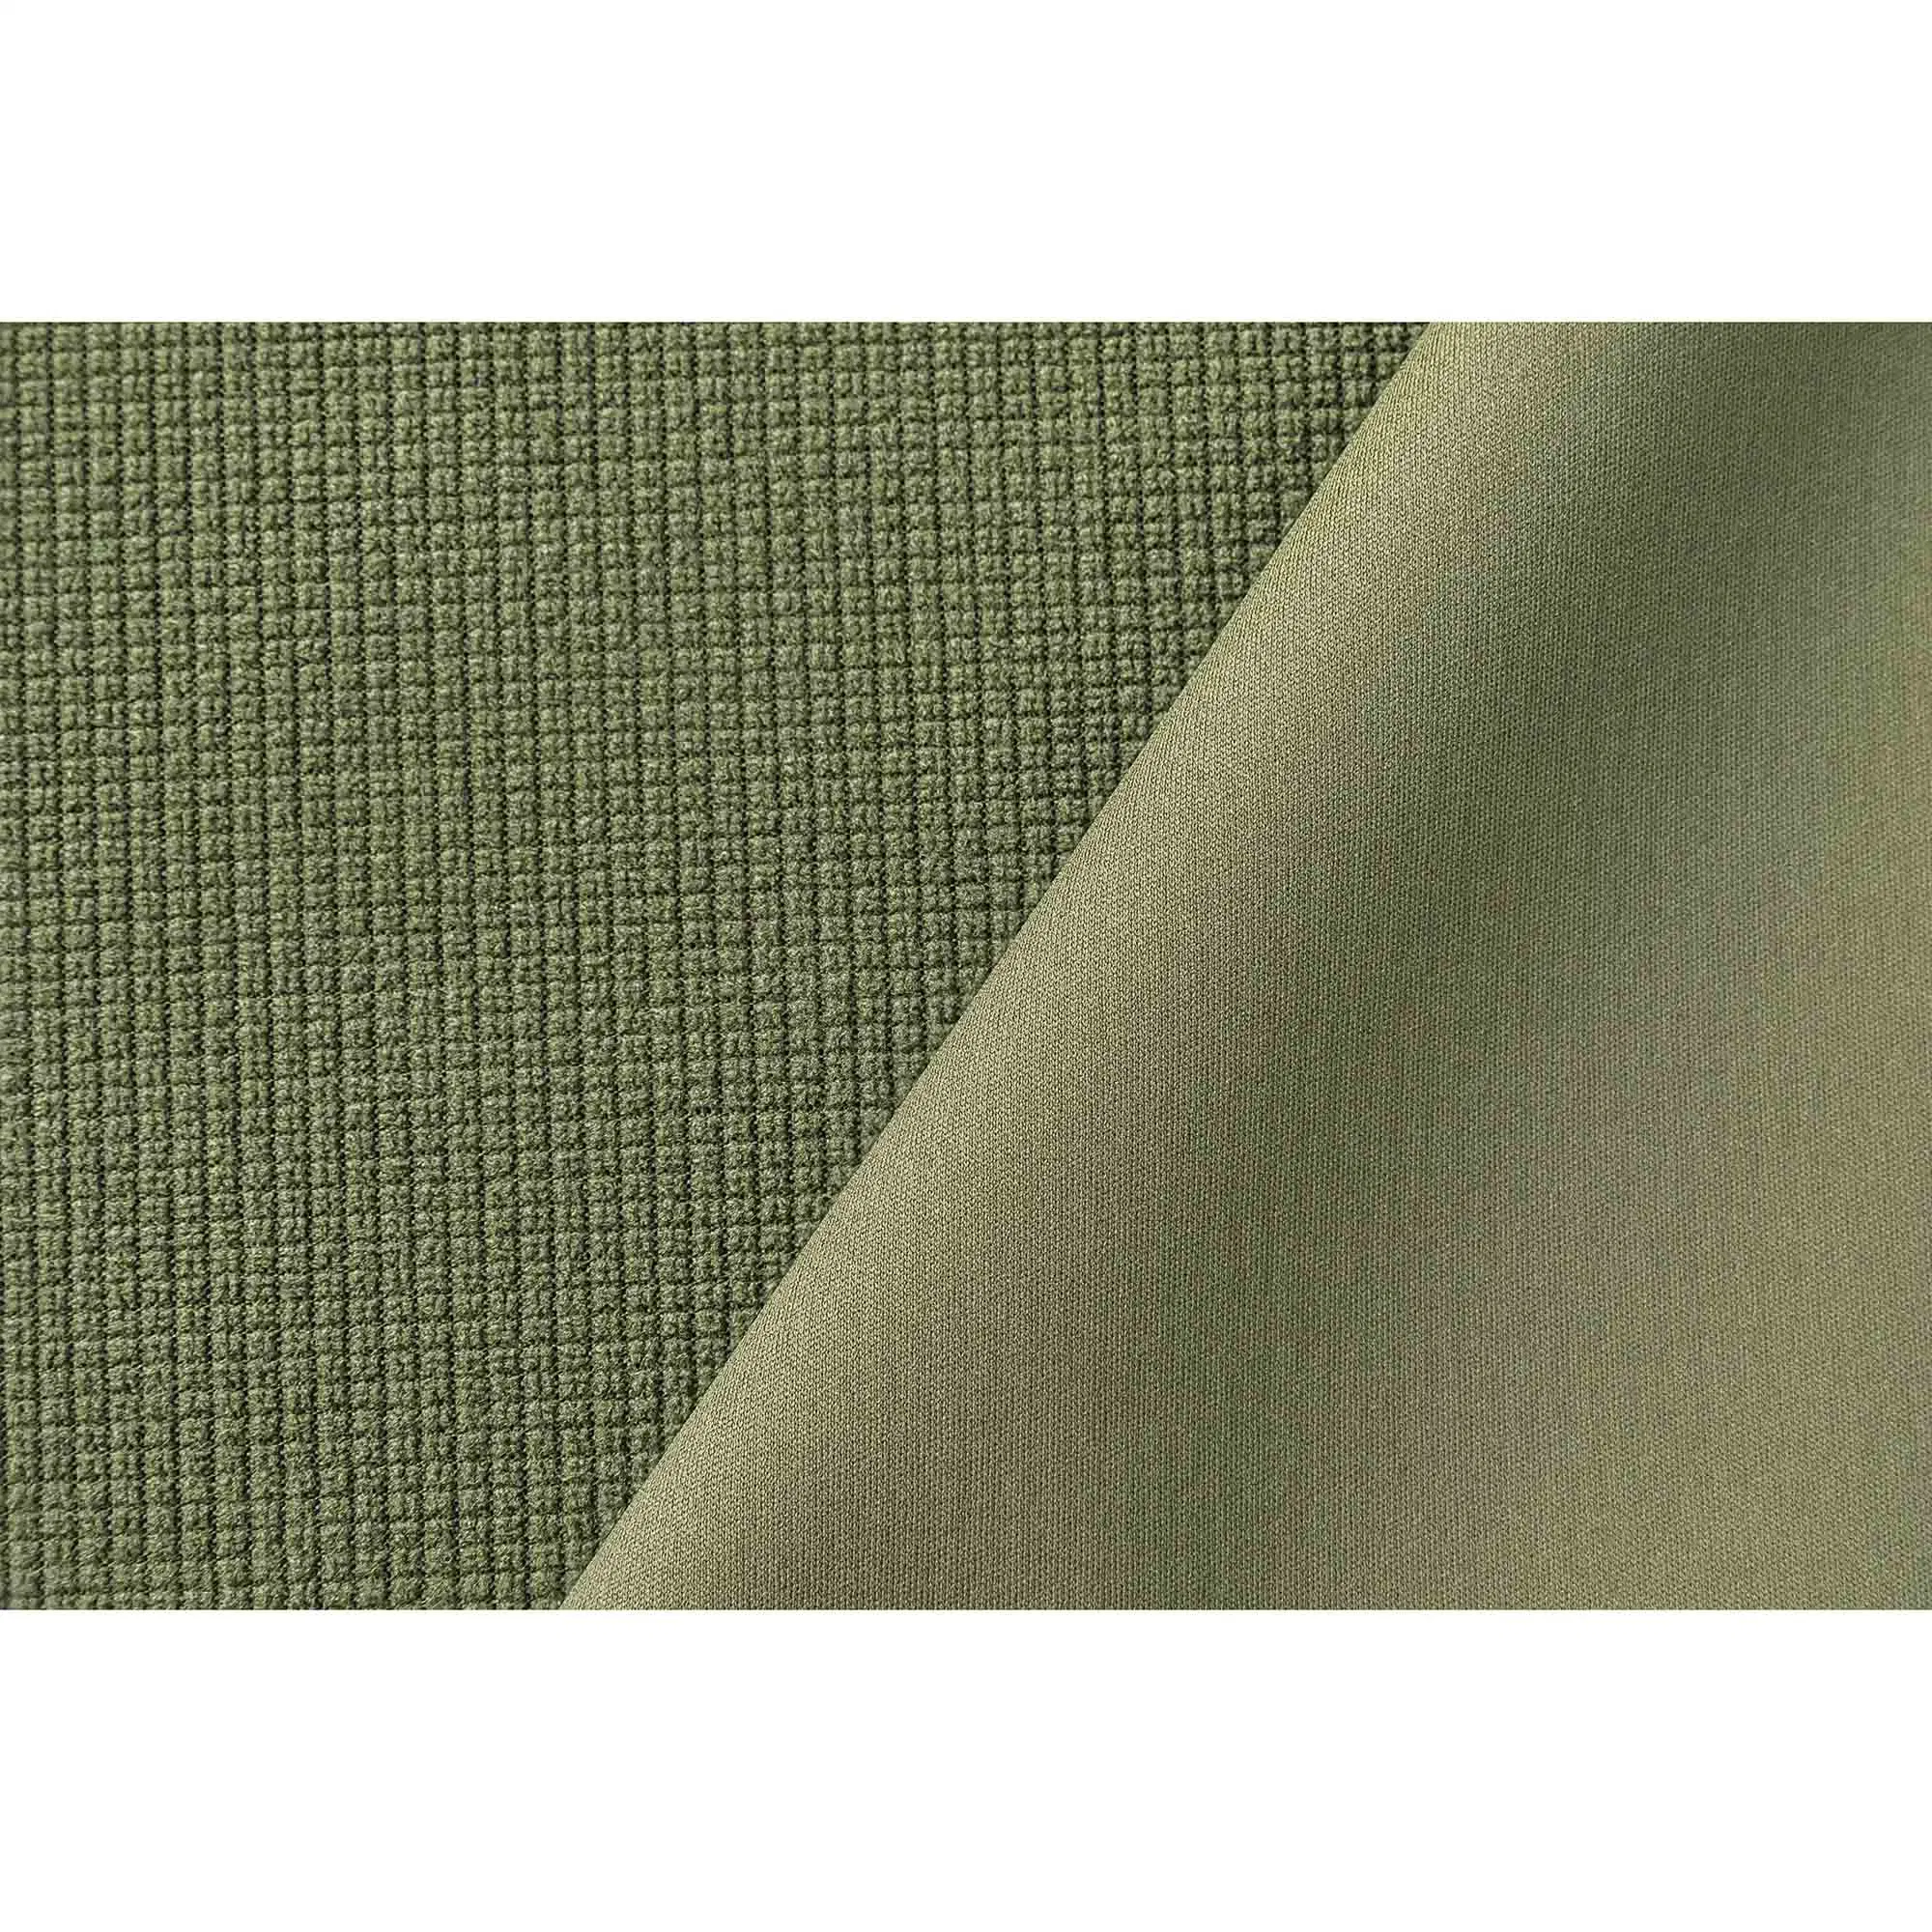 75D/100d tela elástica de caparazón blando de TPU con felpa Jacquard de la servidumbre de tejido, W/P: 8000mm, MVP: 800 mm, laminado de tres capas de tela. Pegado de caparazón blando tejido.